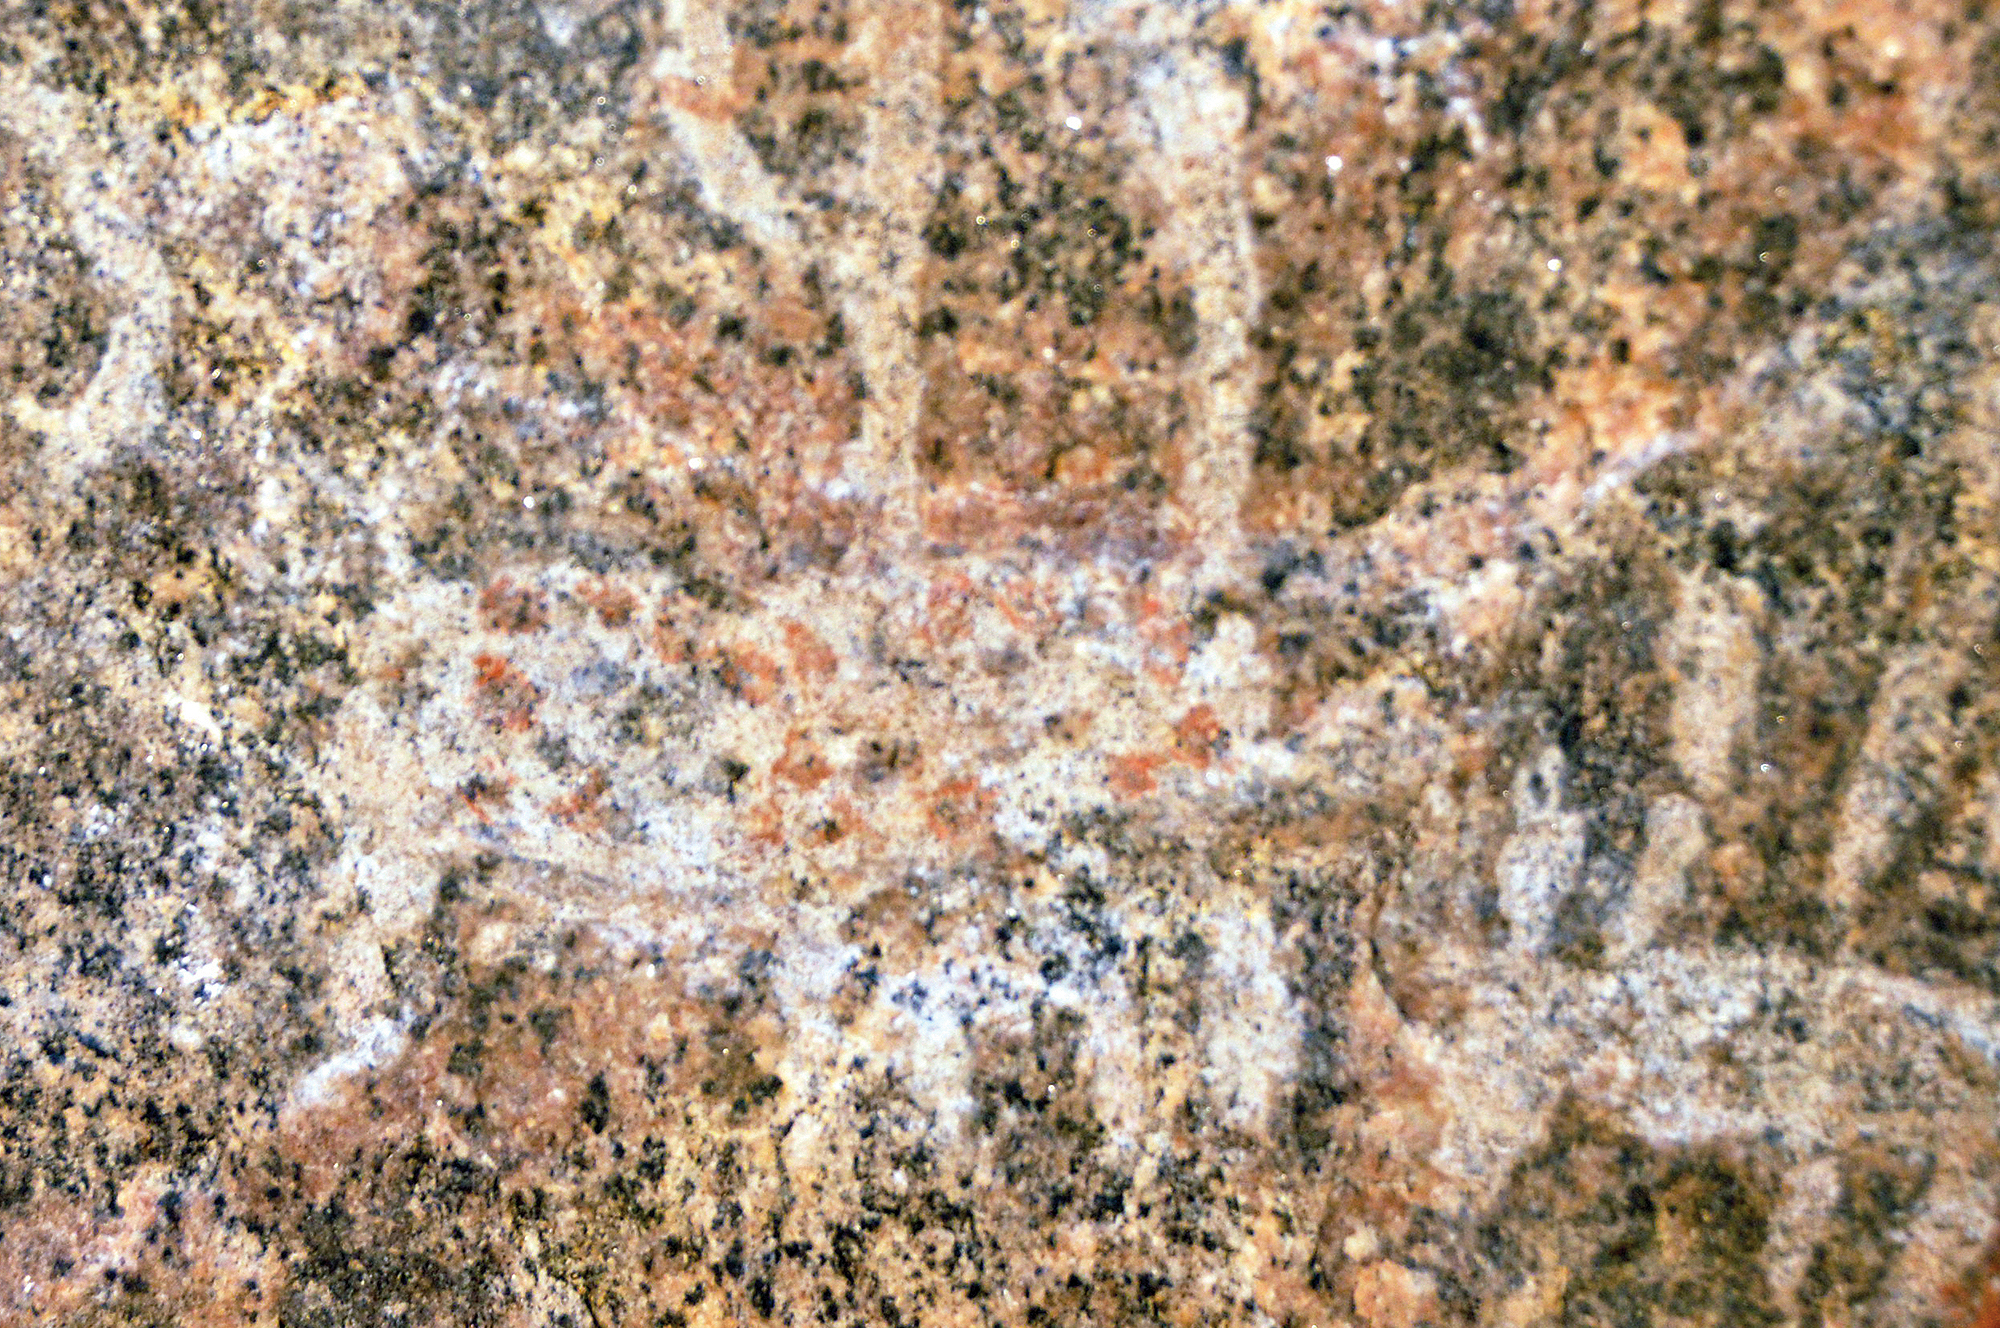 Bradshaw Foundation Thantirimale Rock Shelter Rock Art Paintings Engraving Sites Sri Lanka